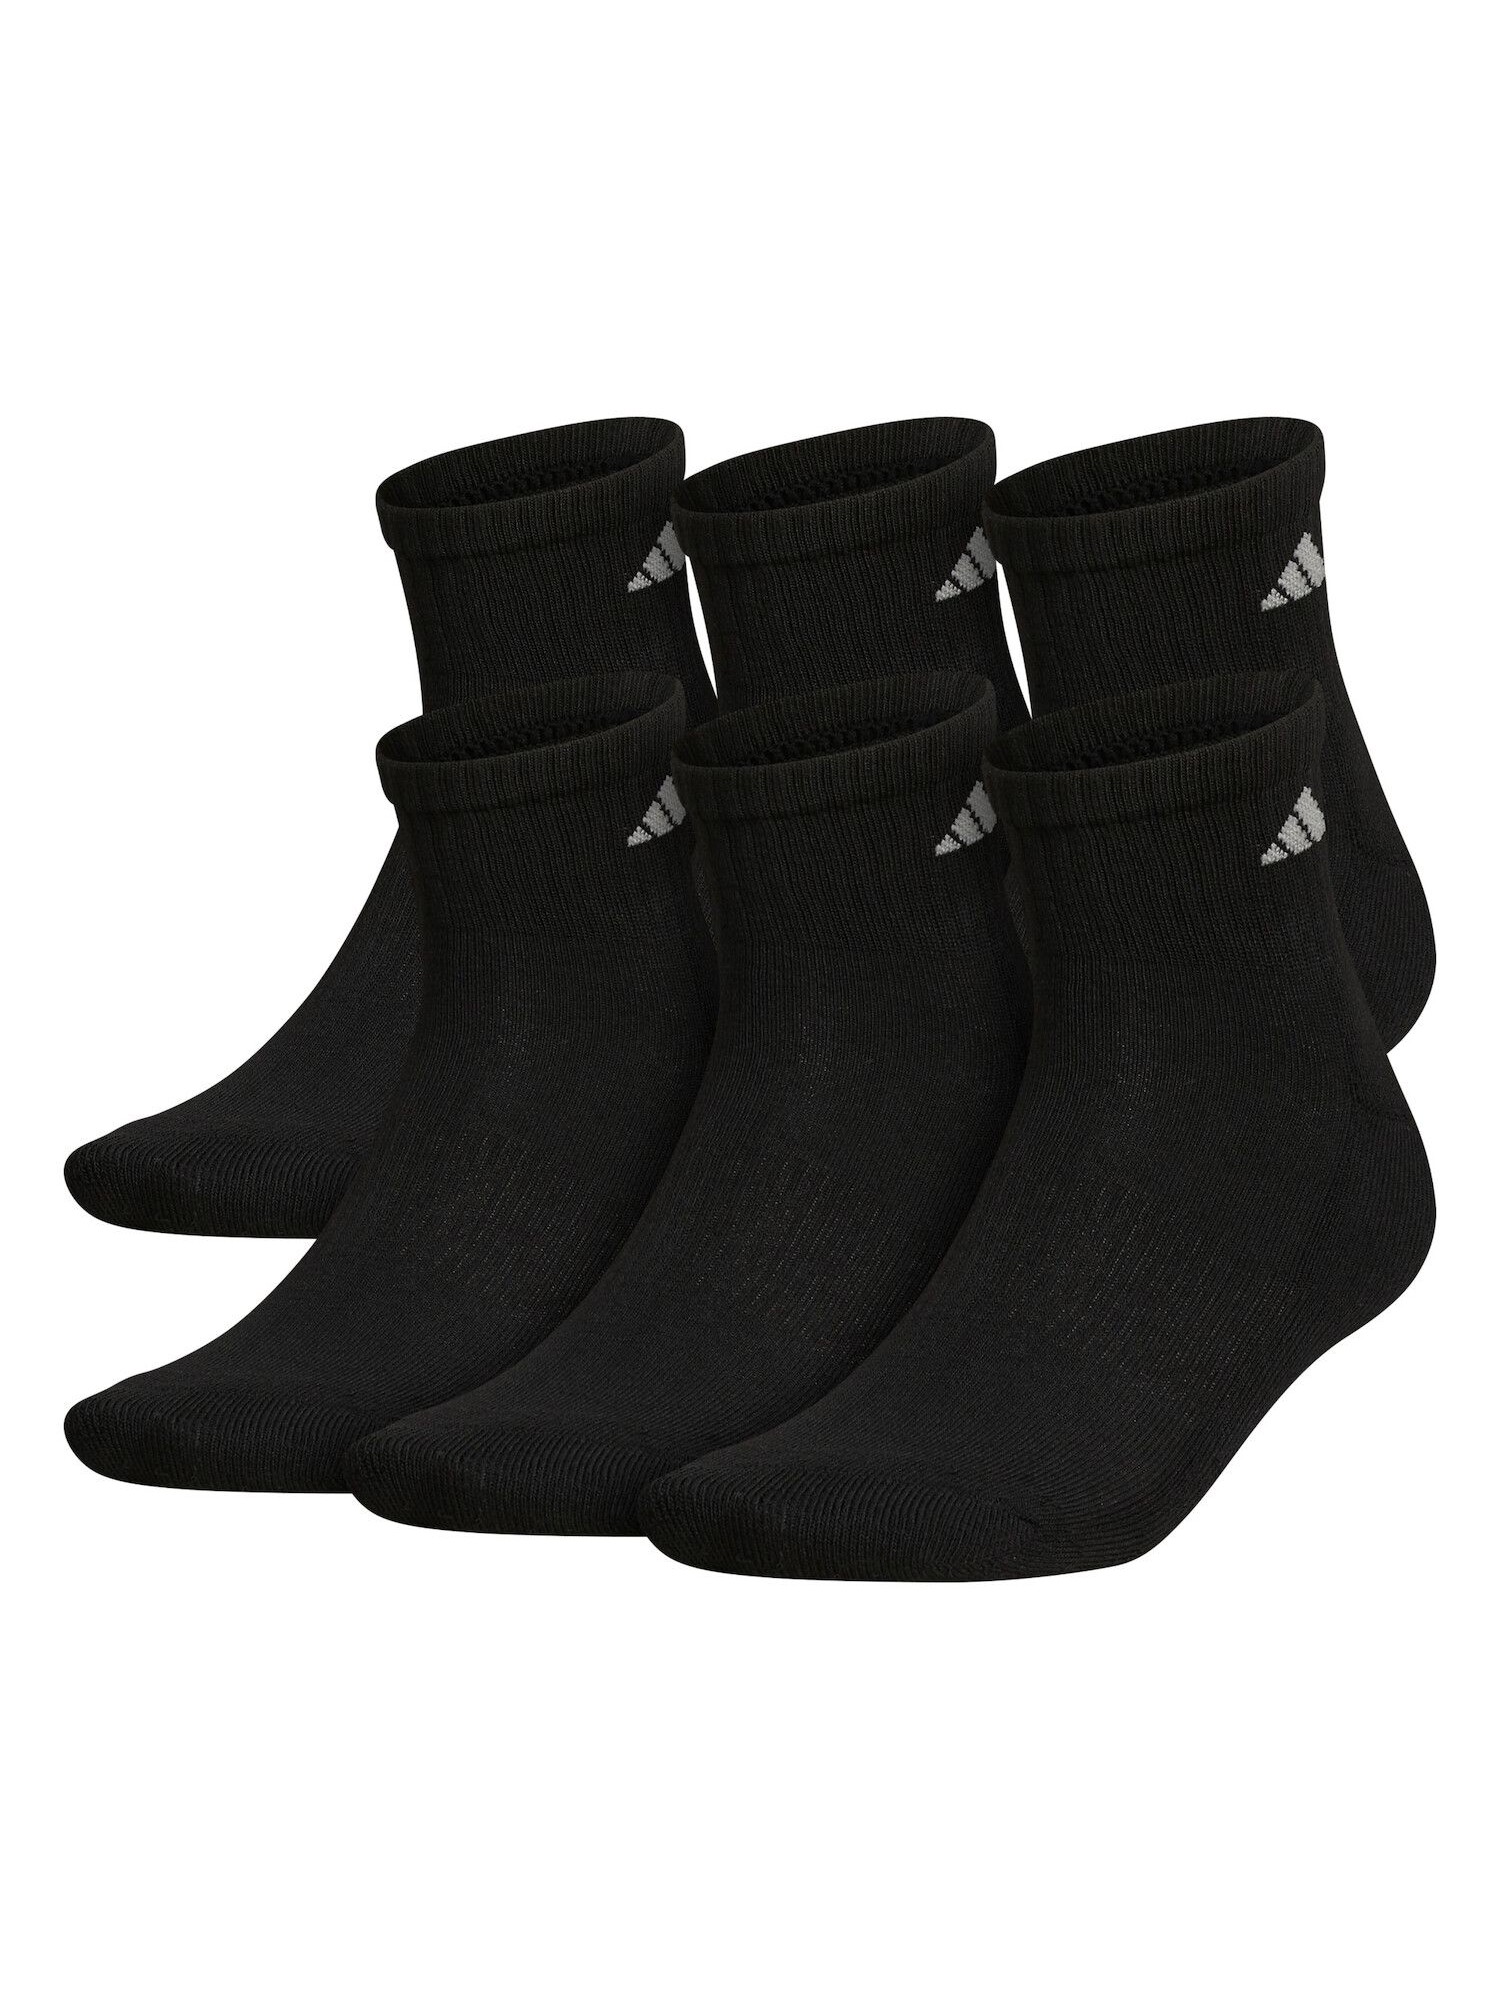 ADIDAS Mens 6 Pack Black Logo Casual Ankle Socks 12-15 - image 1 of 7